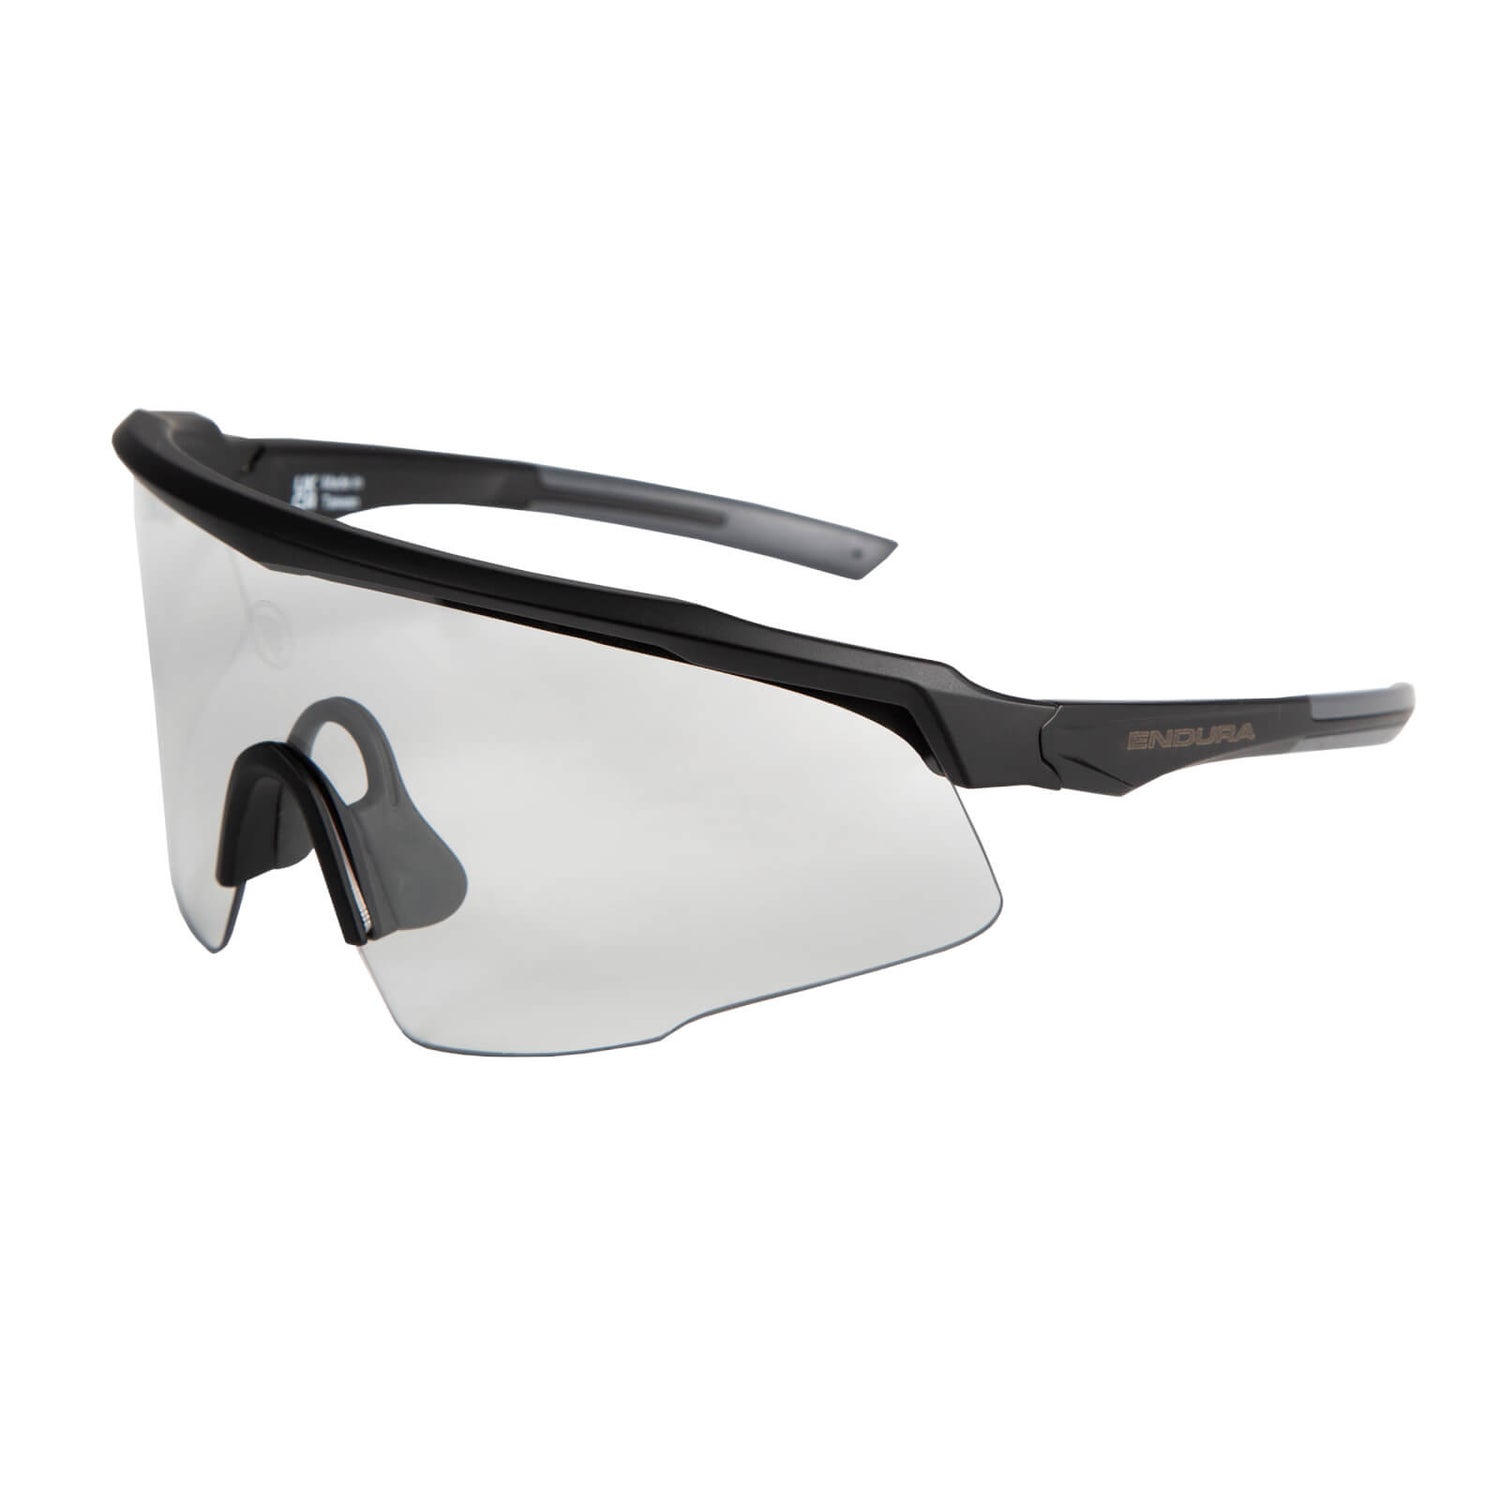 Shumba II Glasses Set Photochromic - Matt Black - One Size